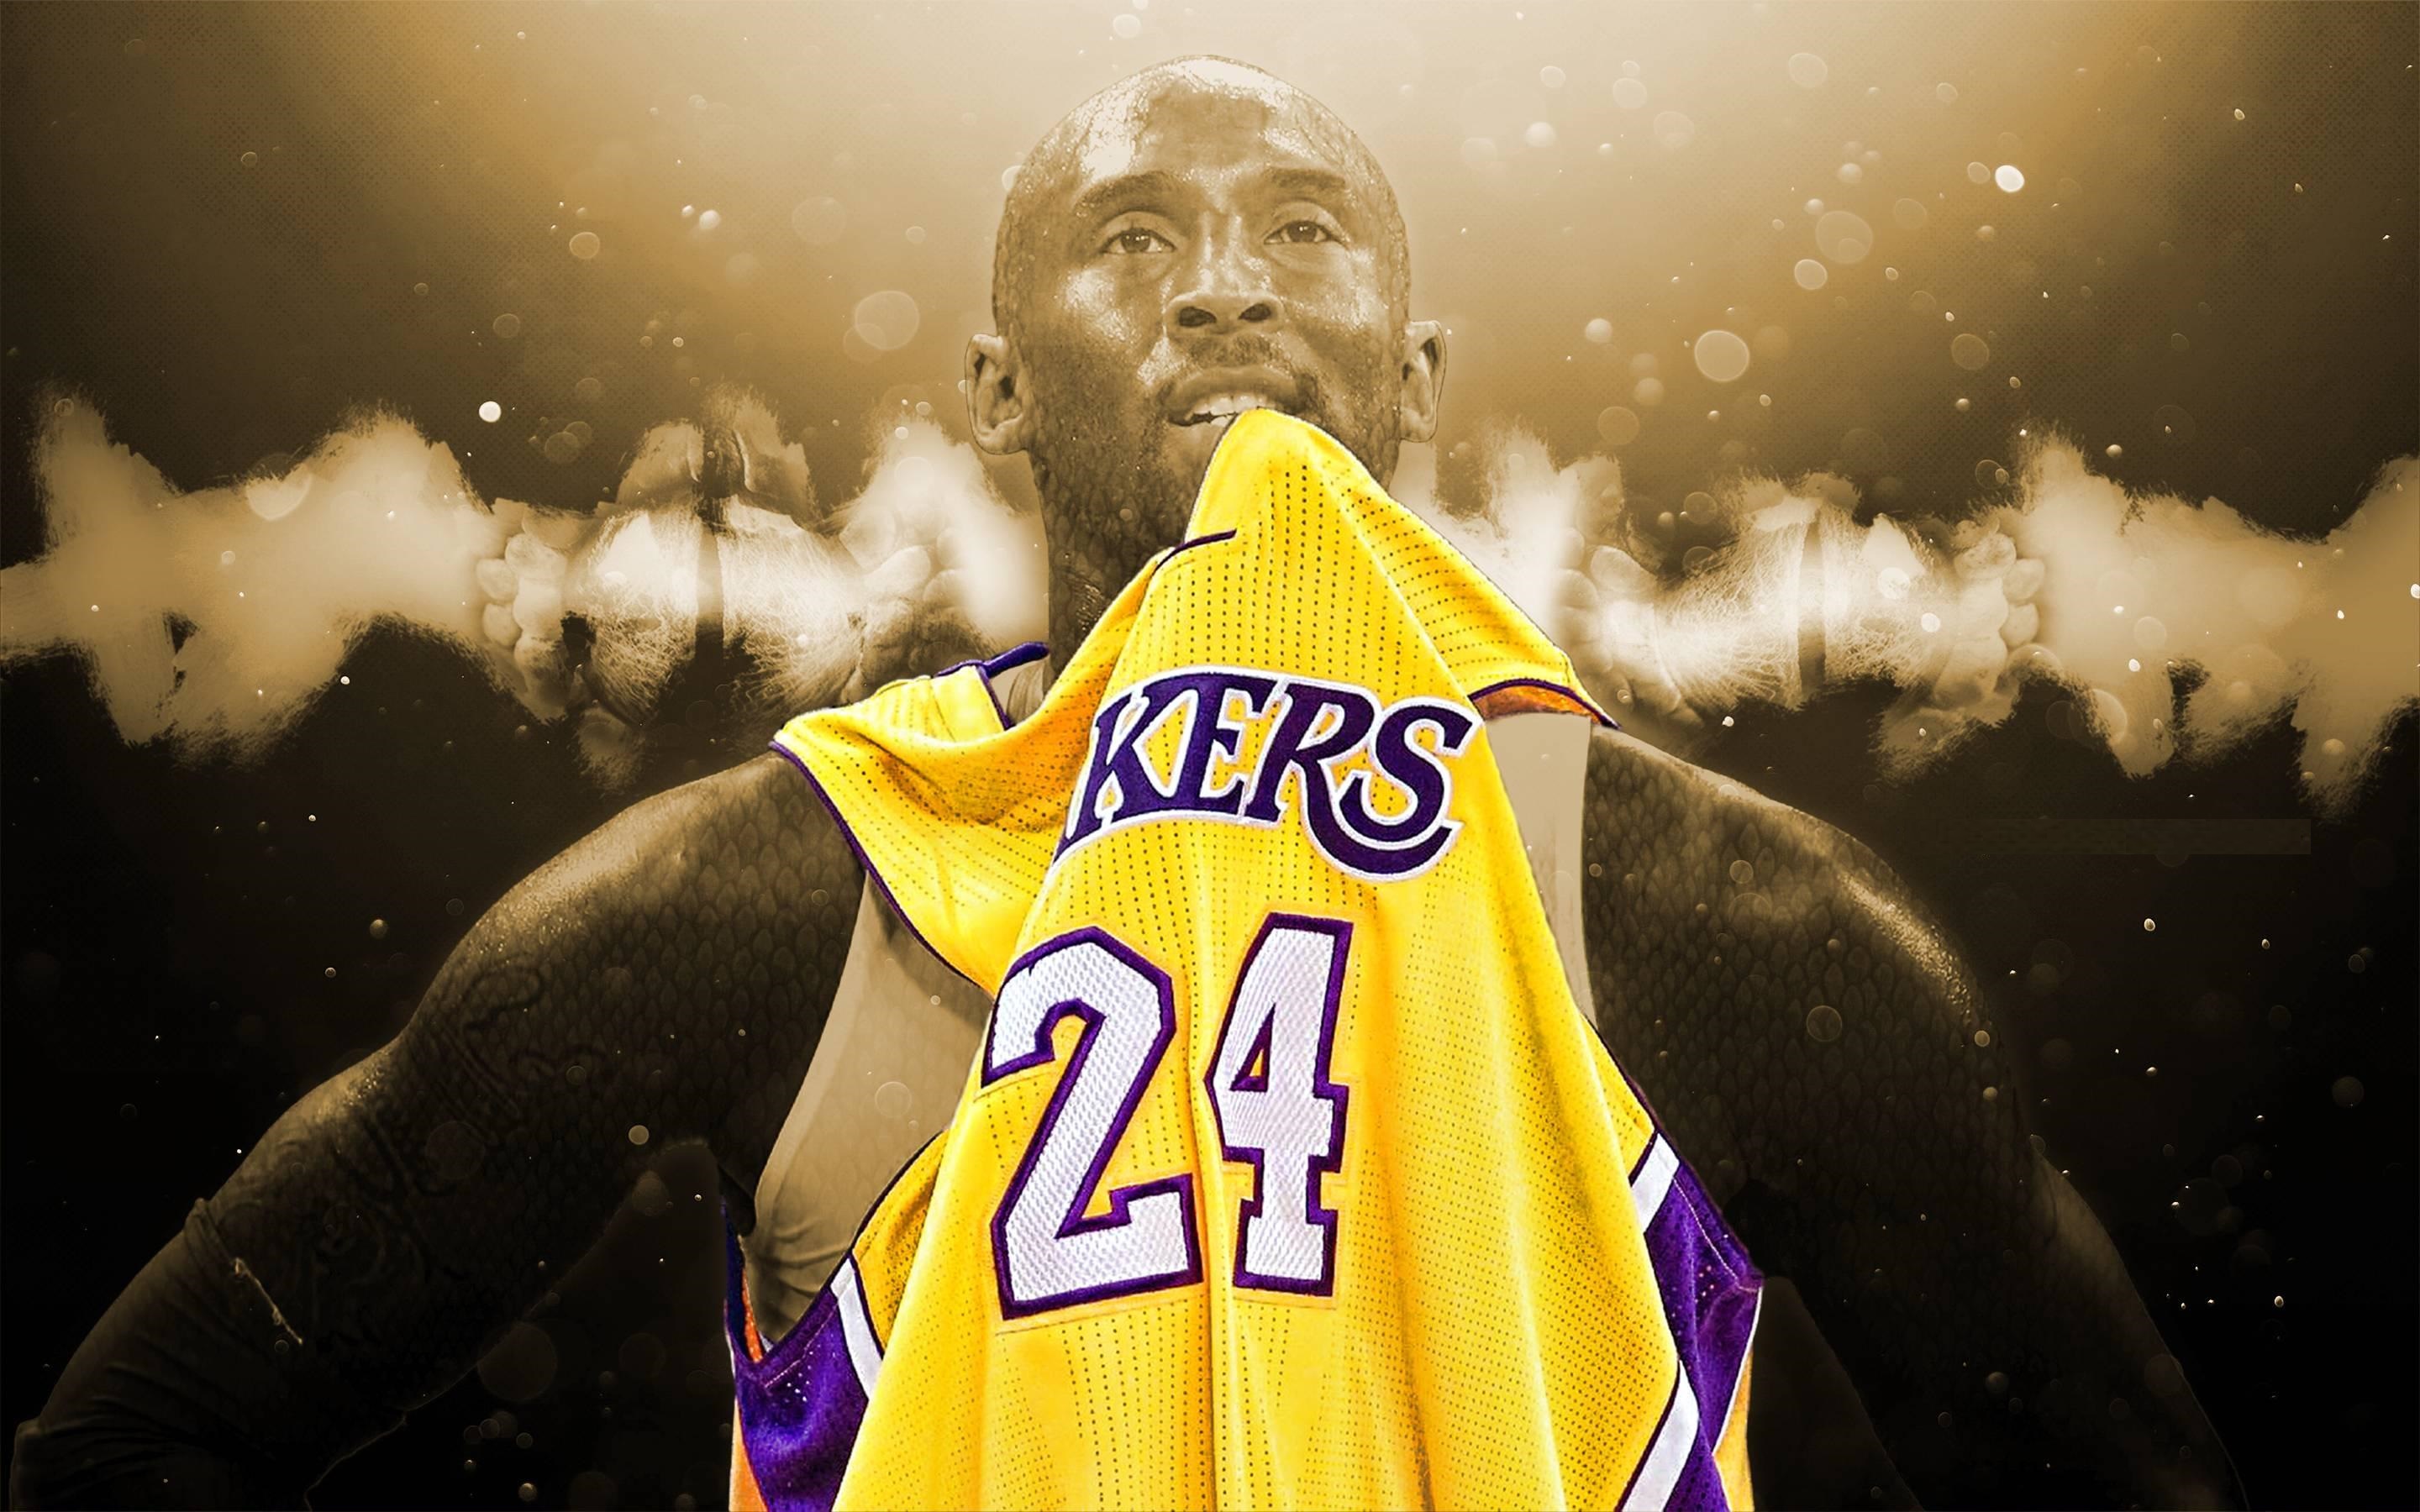 Download Kobe Bryant Wallpaper Lakers Live HD 2021 For Fans Free for  Android - Kobe Bryant Wallpaper Lakers Live HD 2021 For Fans APK Download 